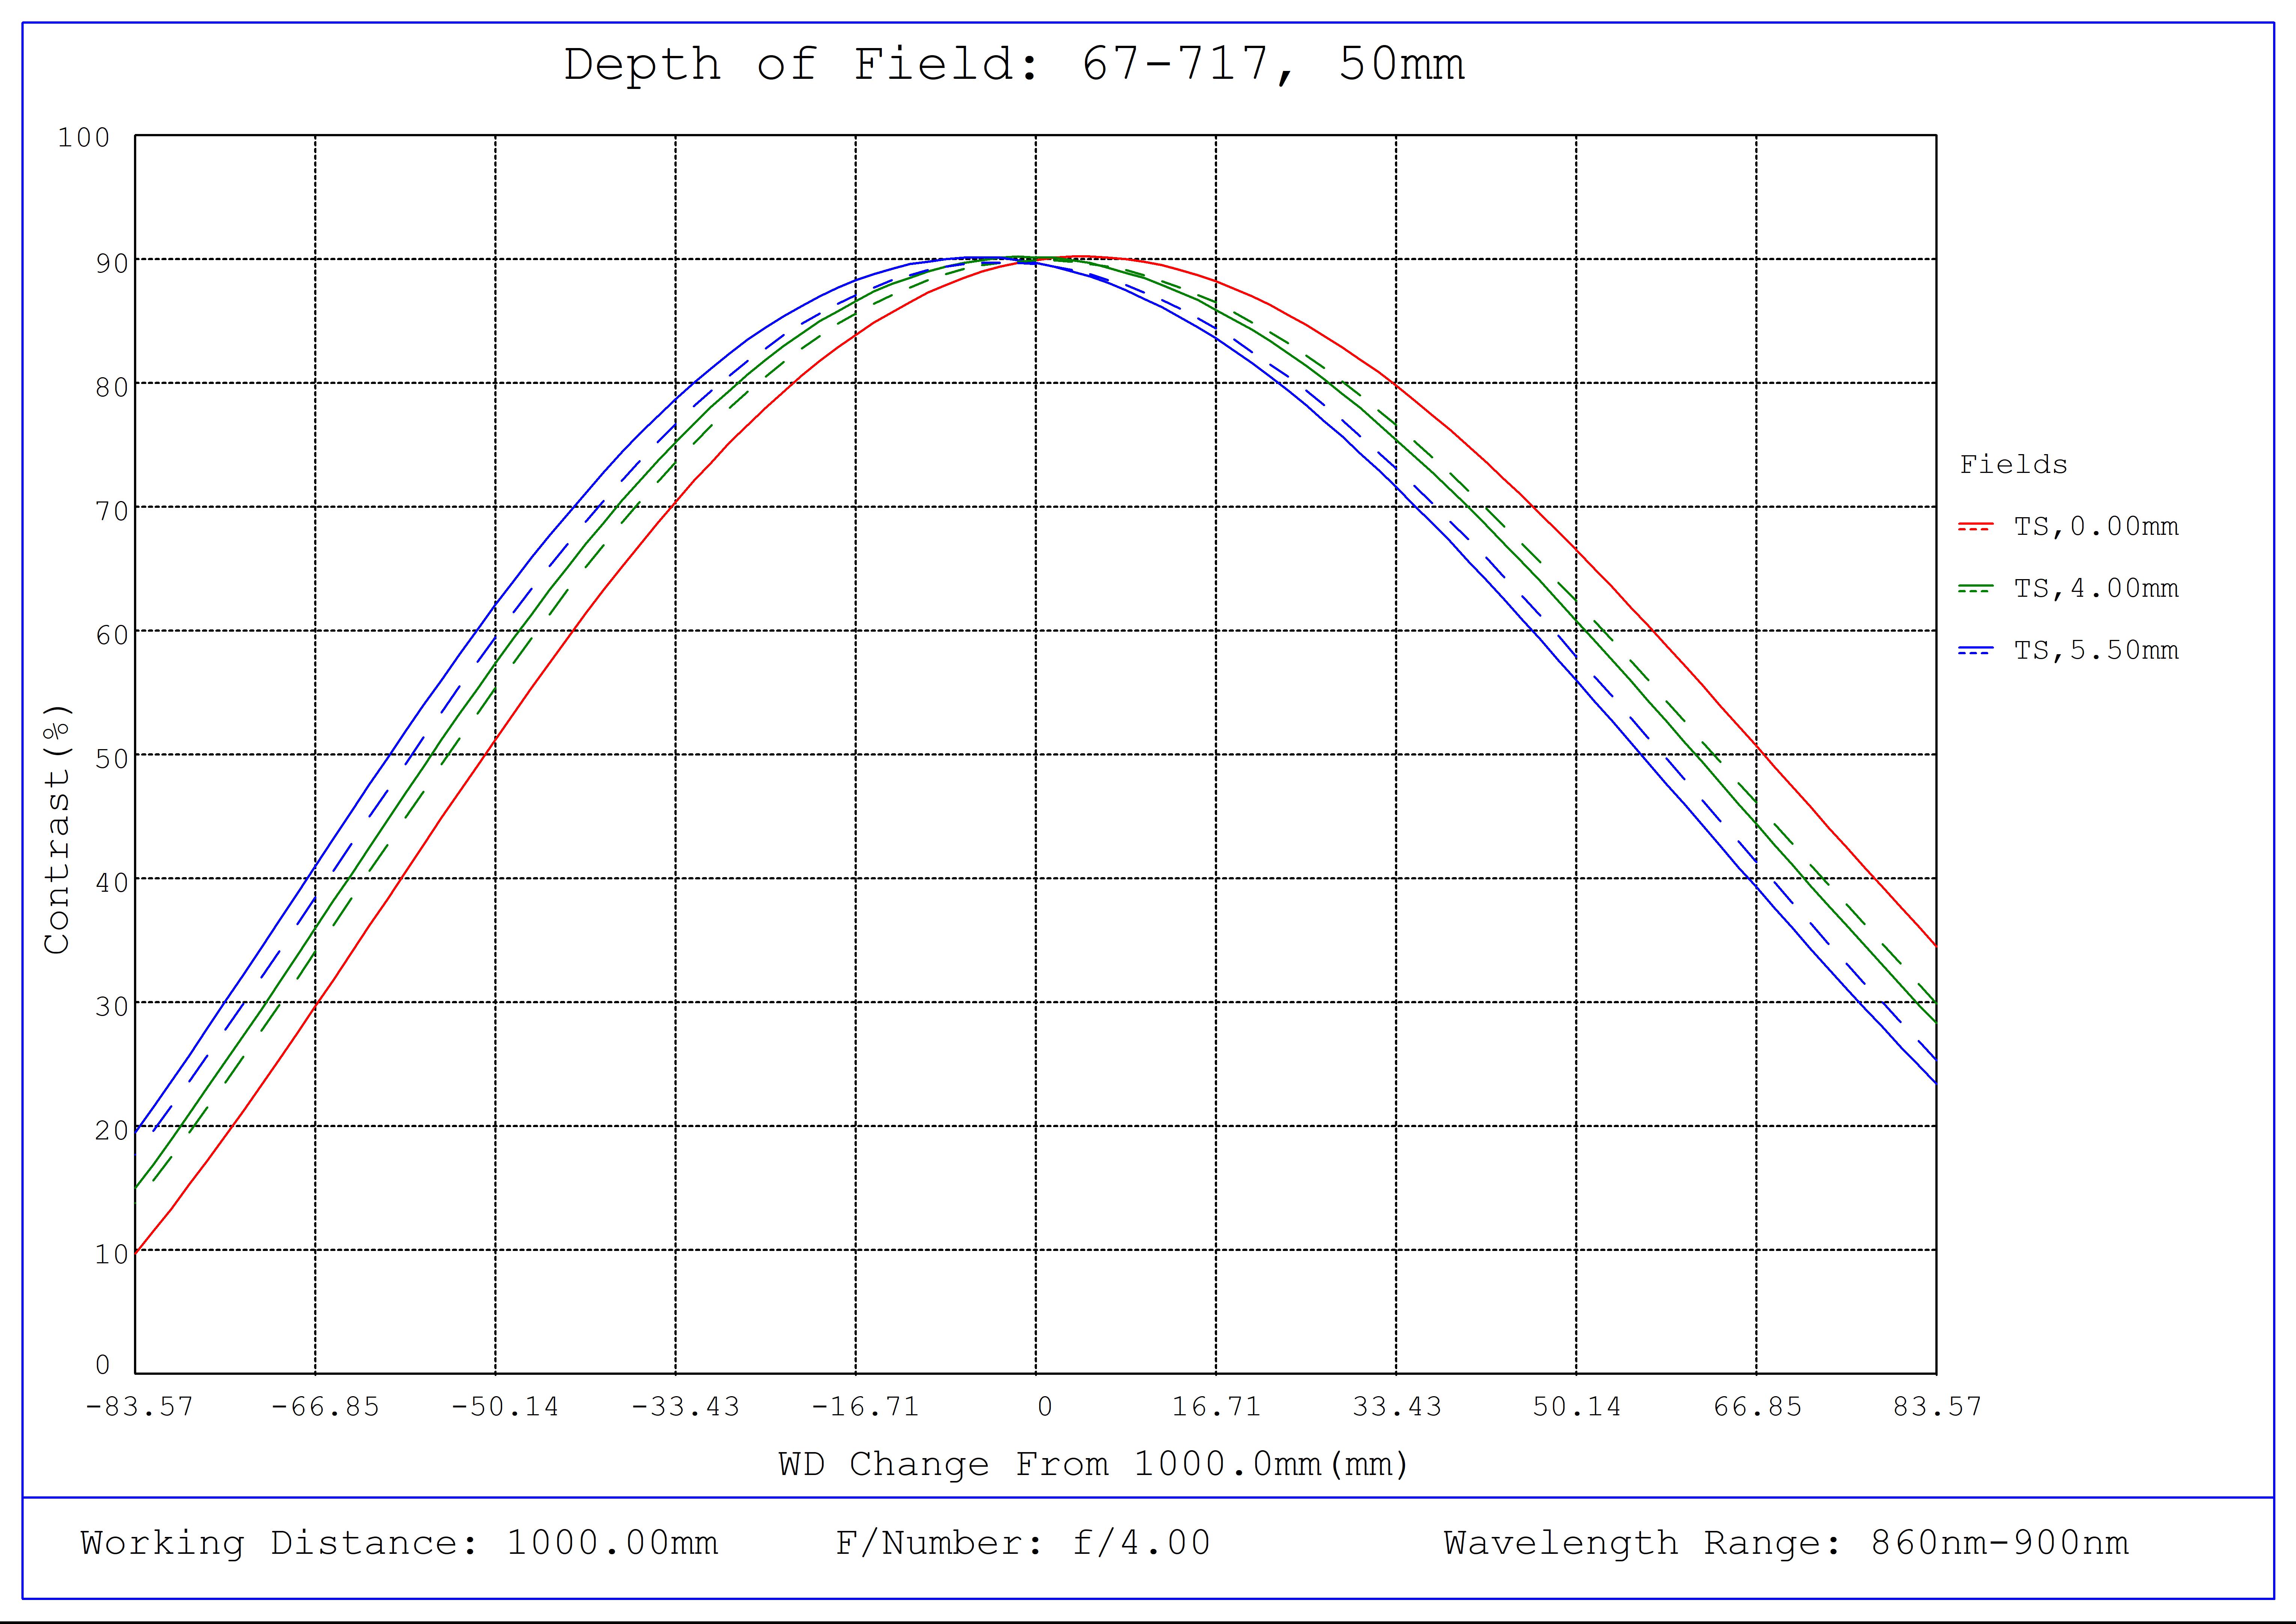 #67-717, 50mm C VIS-NIR Series Fixed Focal Length Lens, Depth of Field Plot (NIR), 1000mm Working Distance, f4